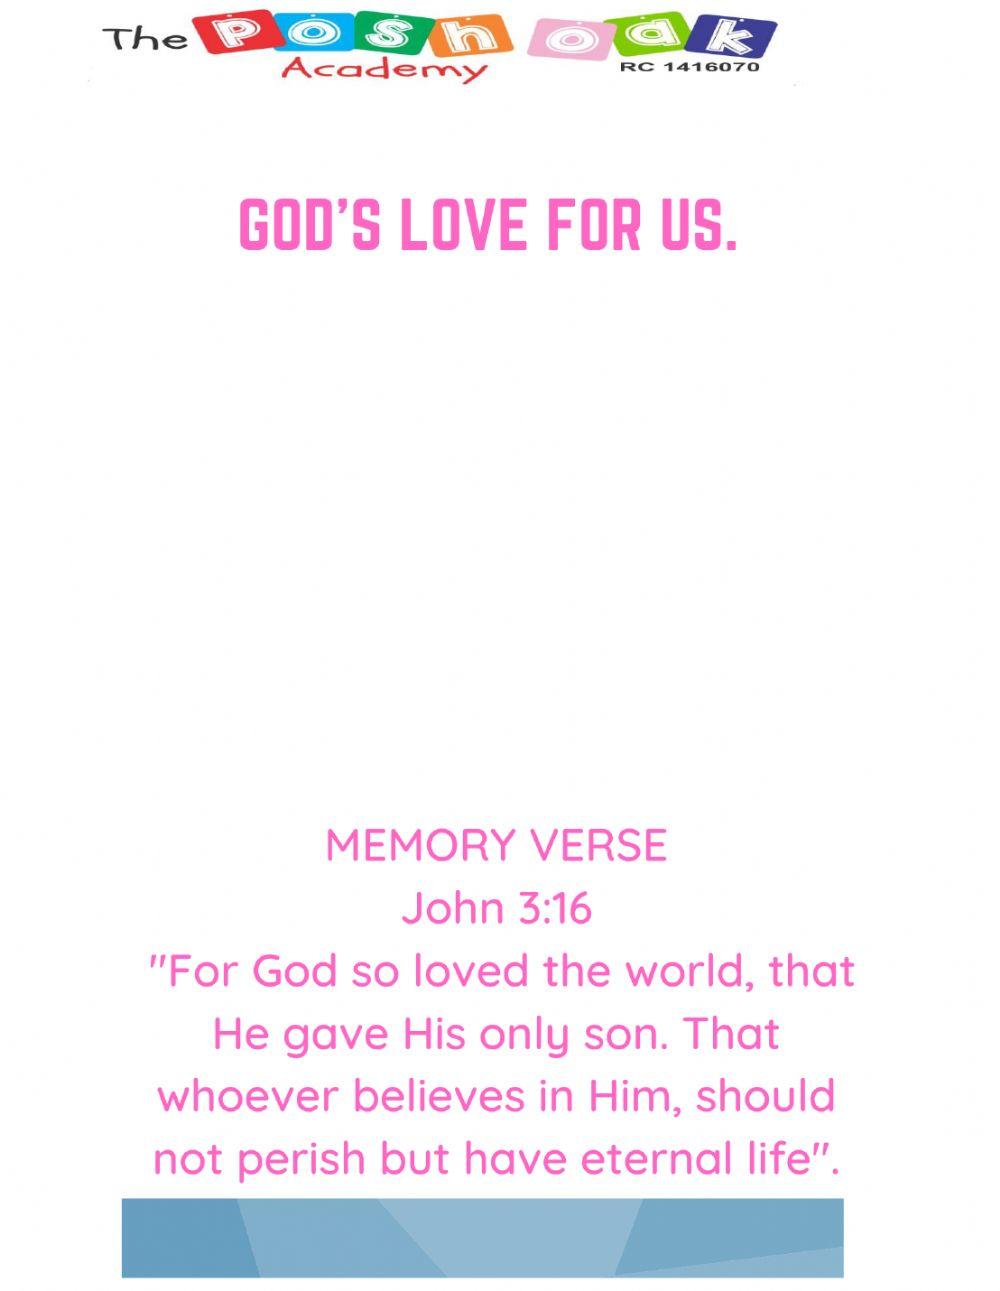 God's love for us